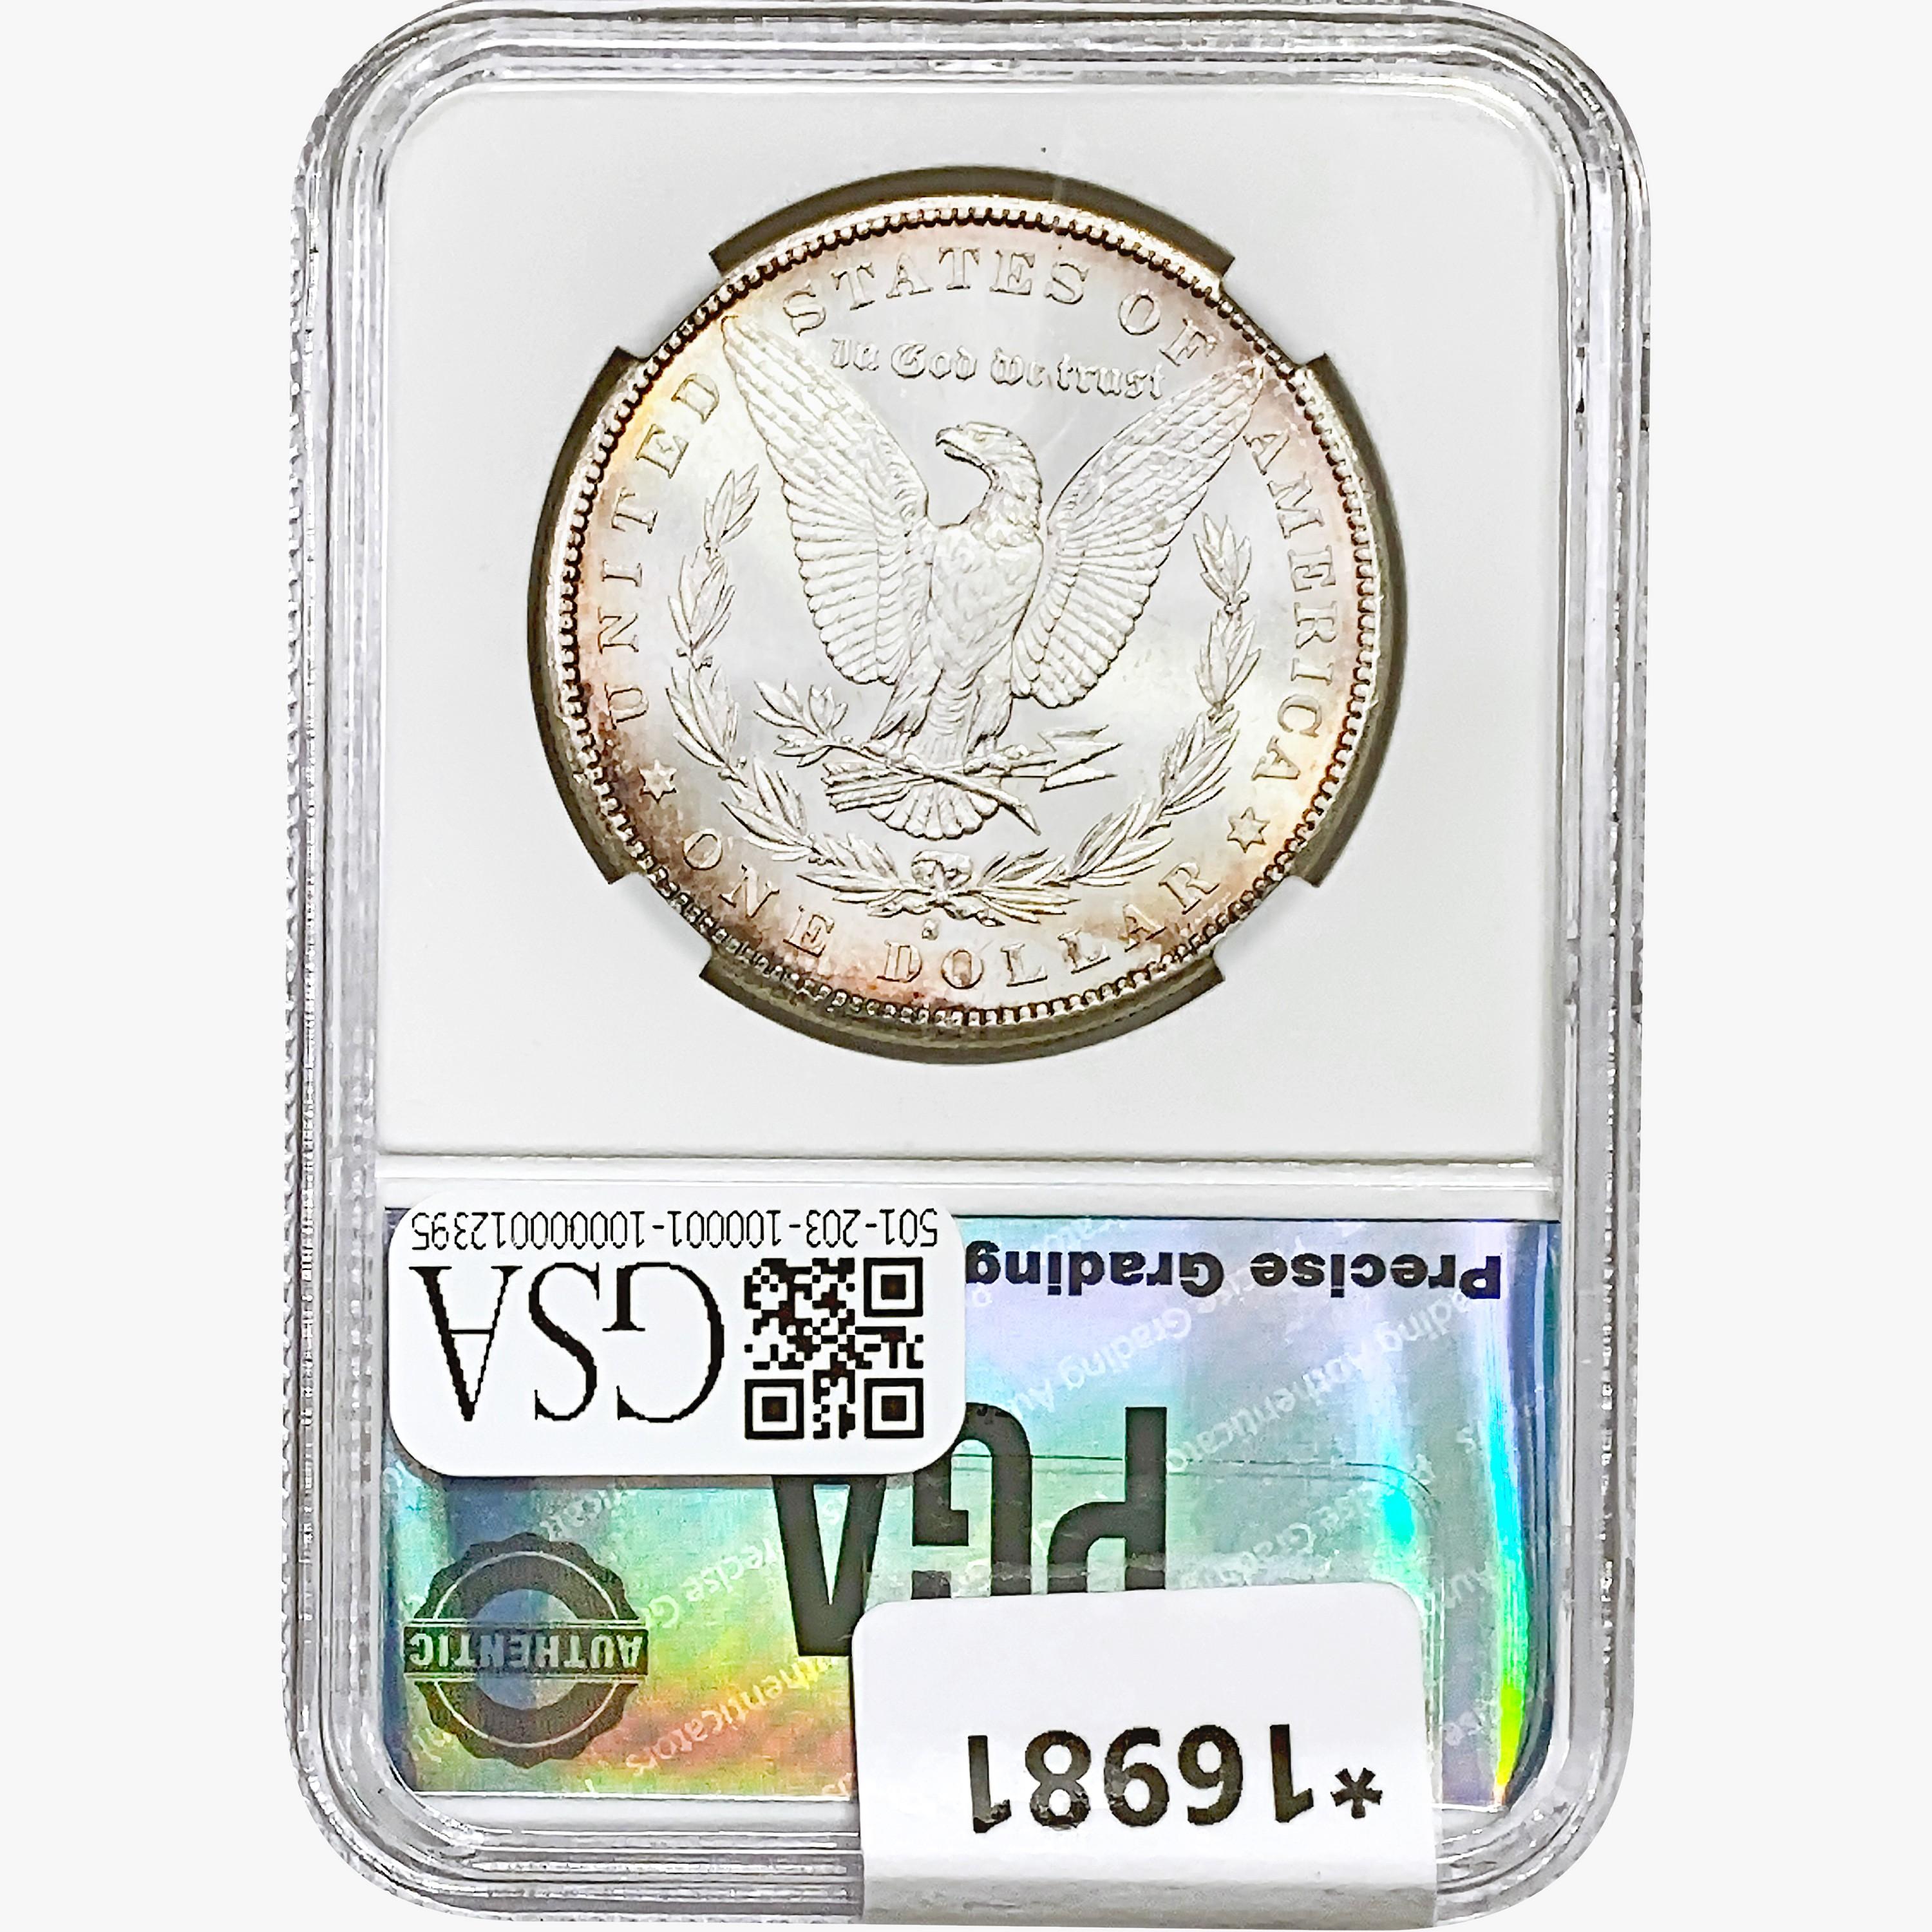 1881-S Morgan Silver Dollar PGA MS66+